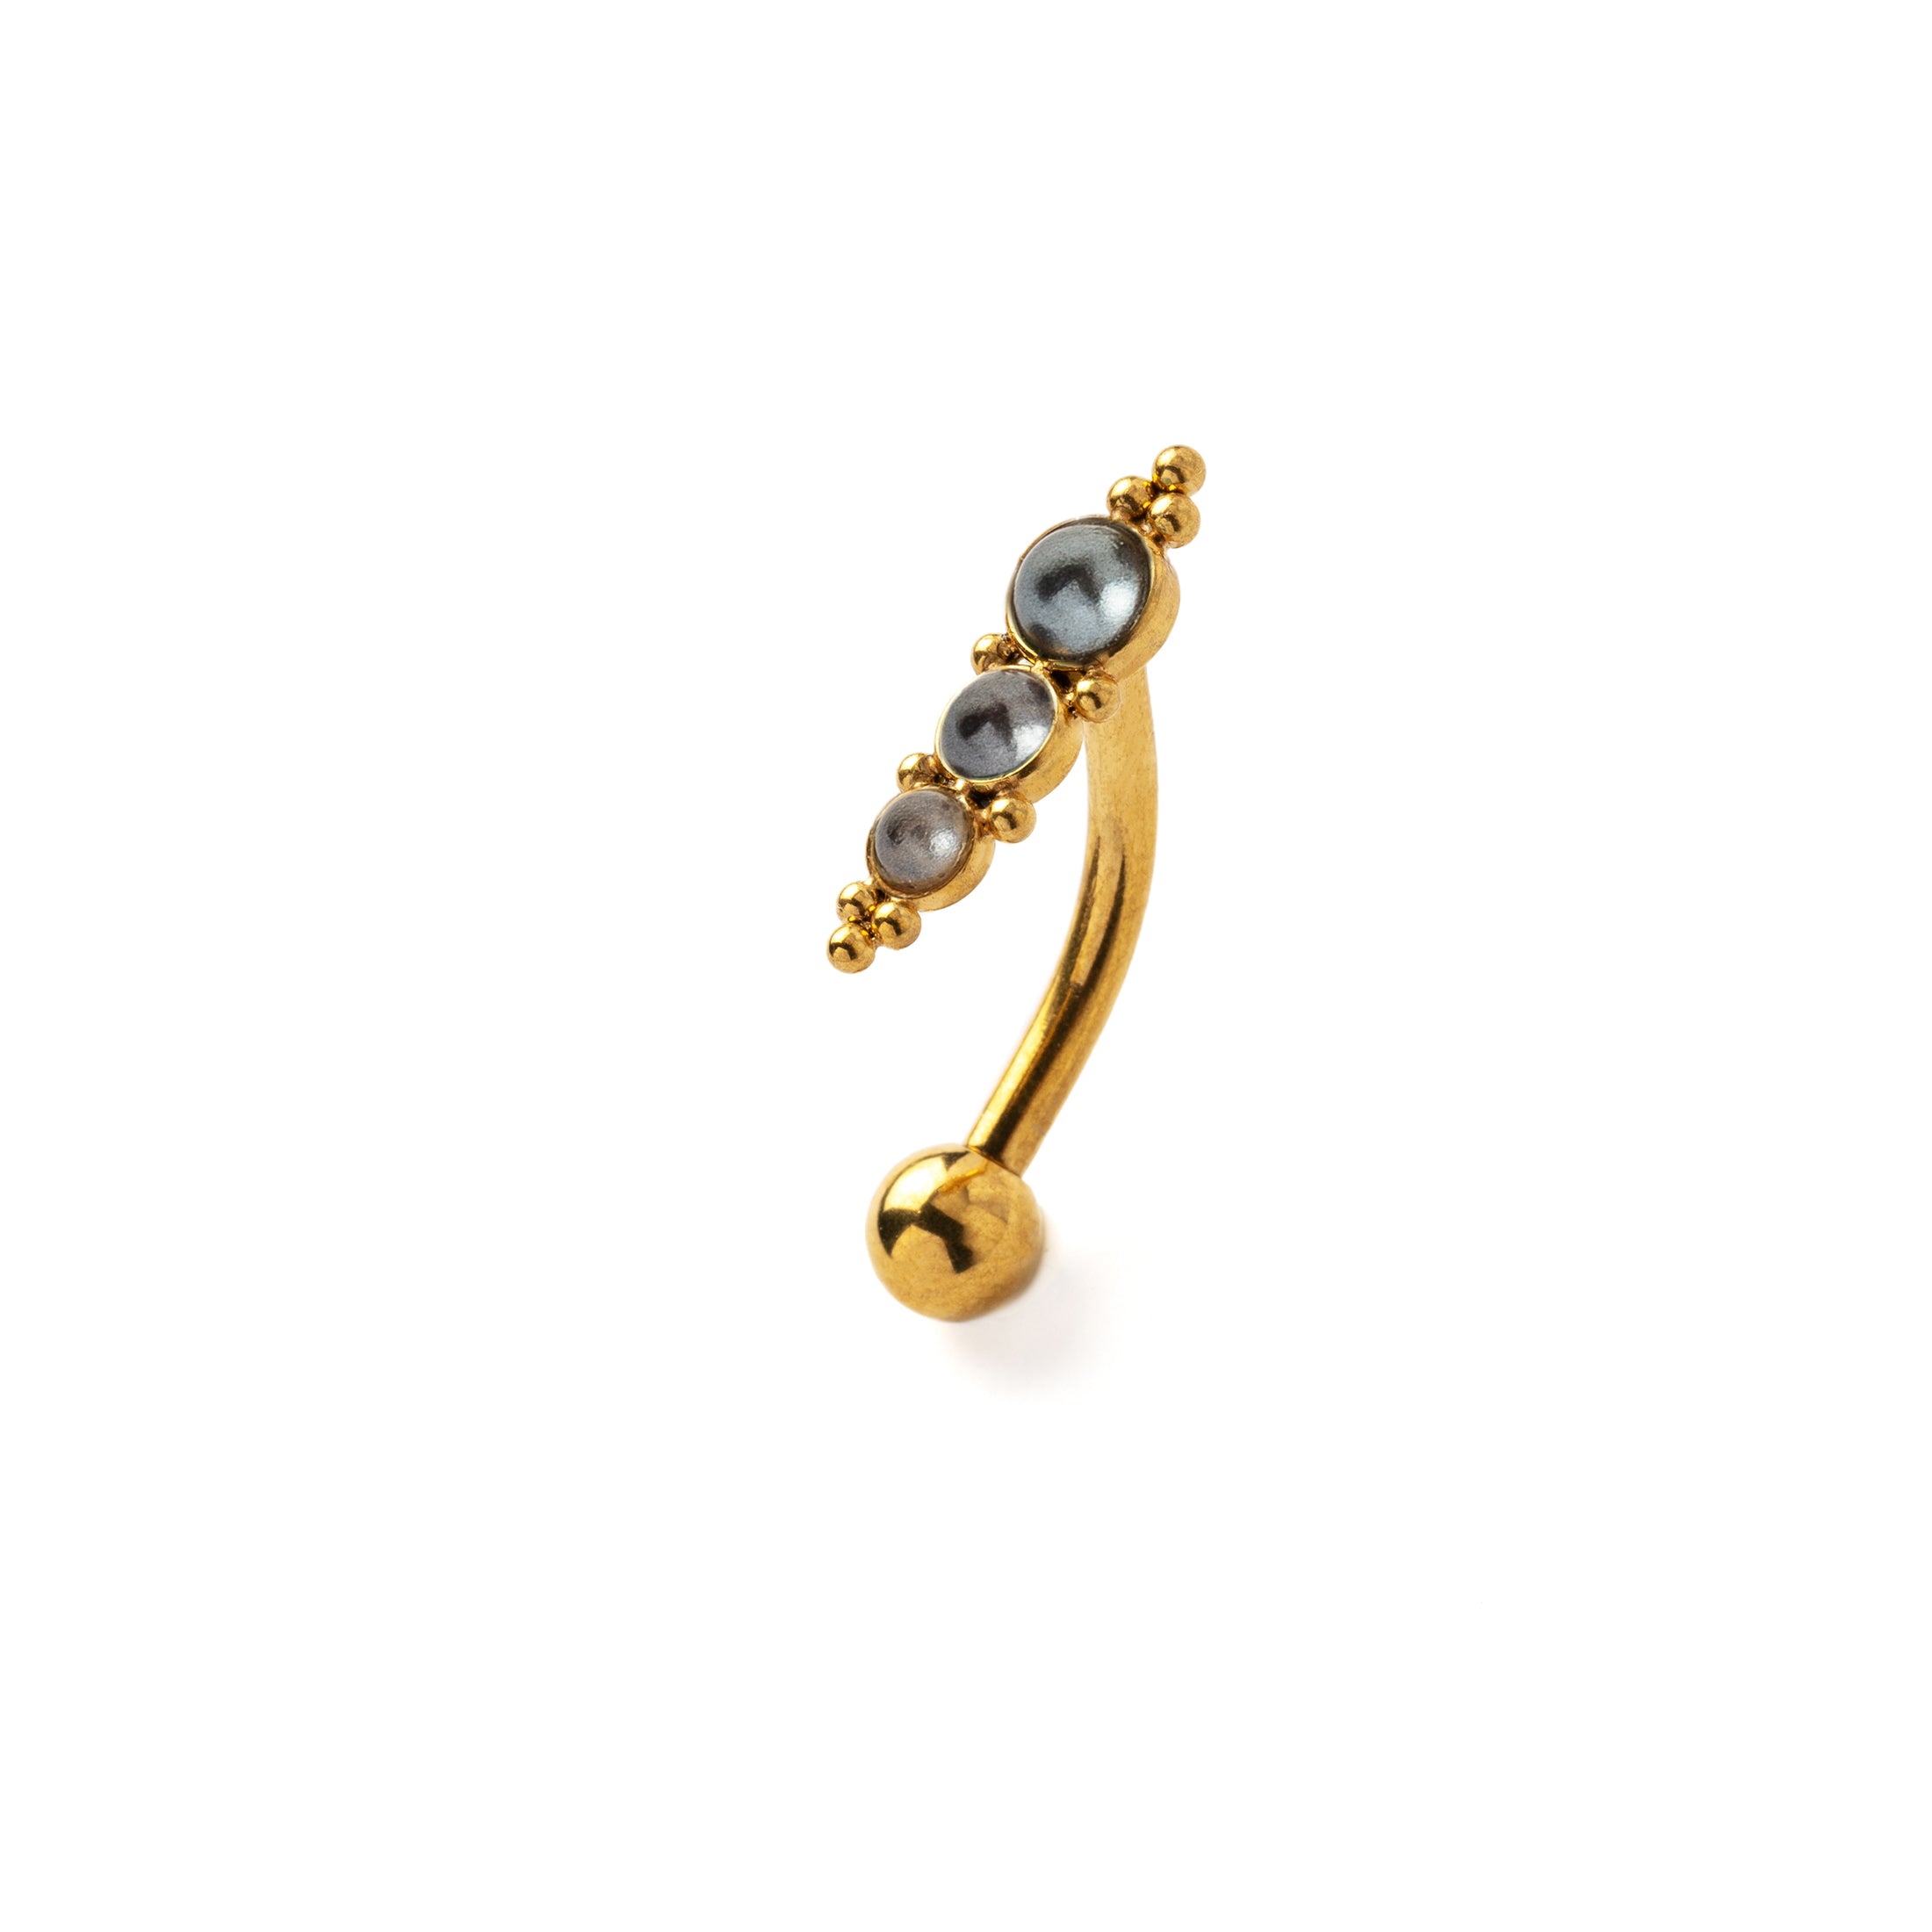 Deva Golden Navel Piercing with Pearls left side view